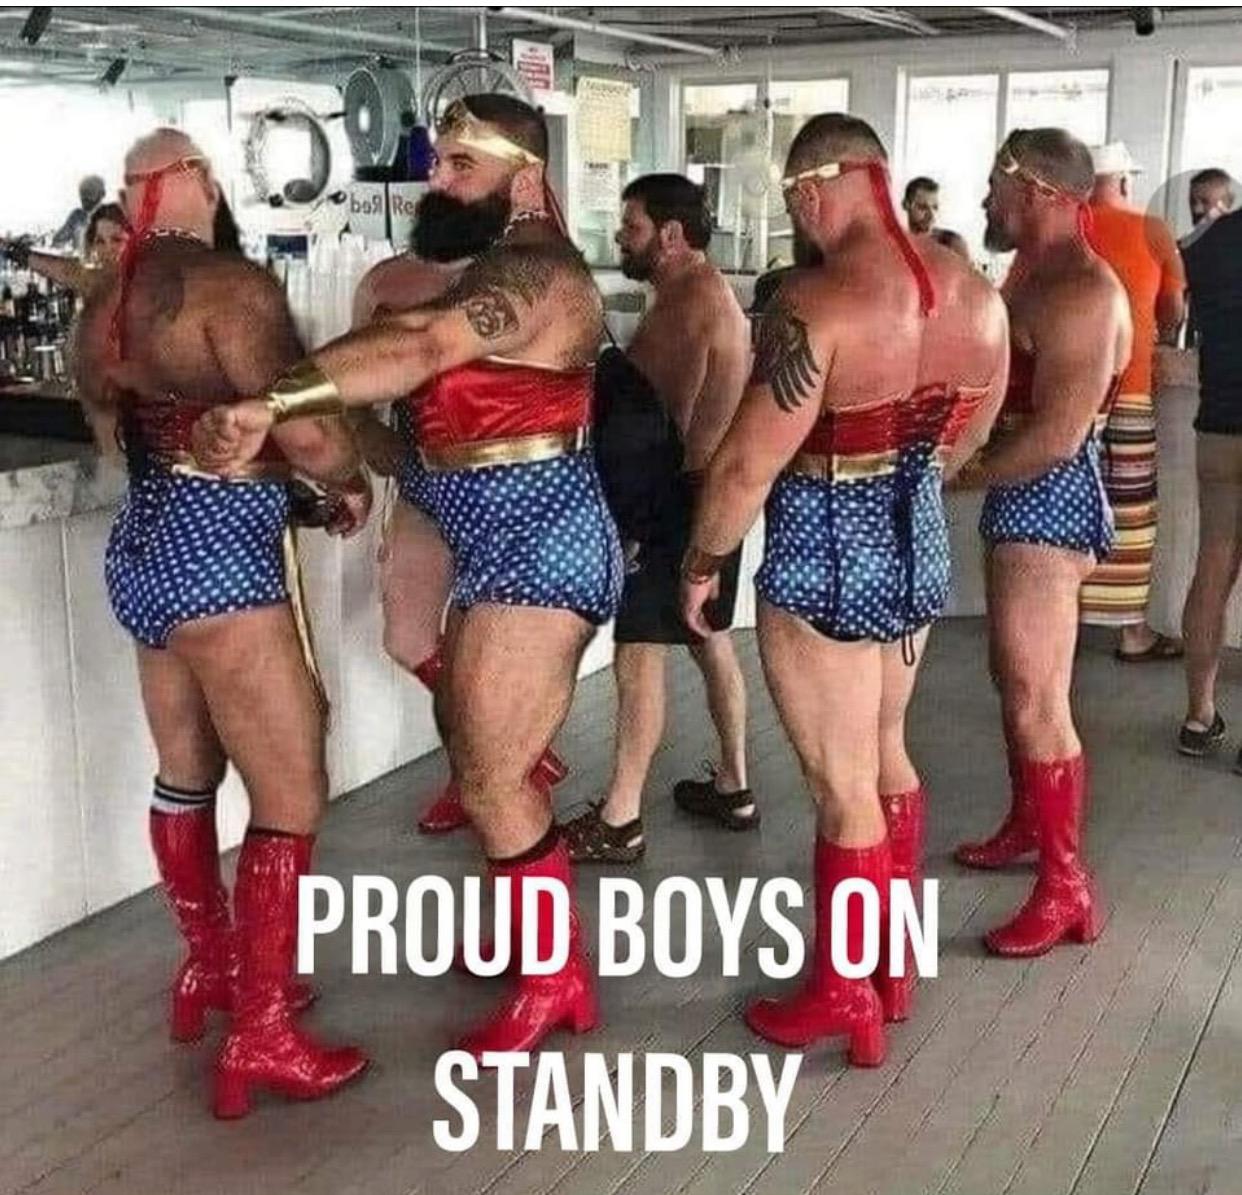 men dressed as women - bo Re Proud Boys On Standby